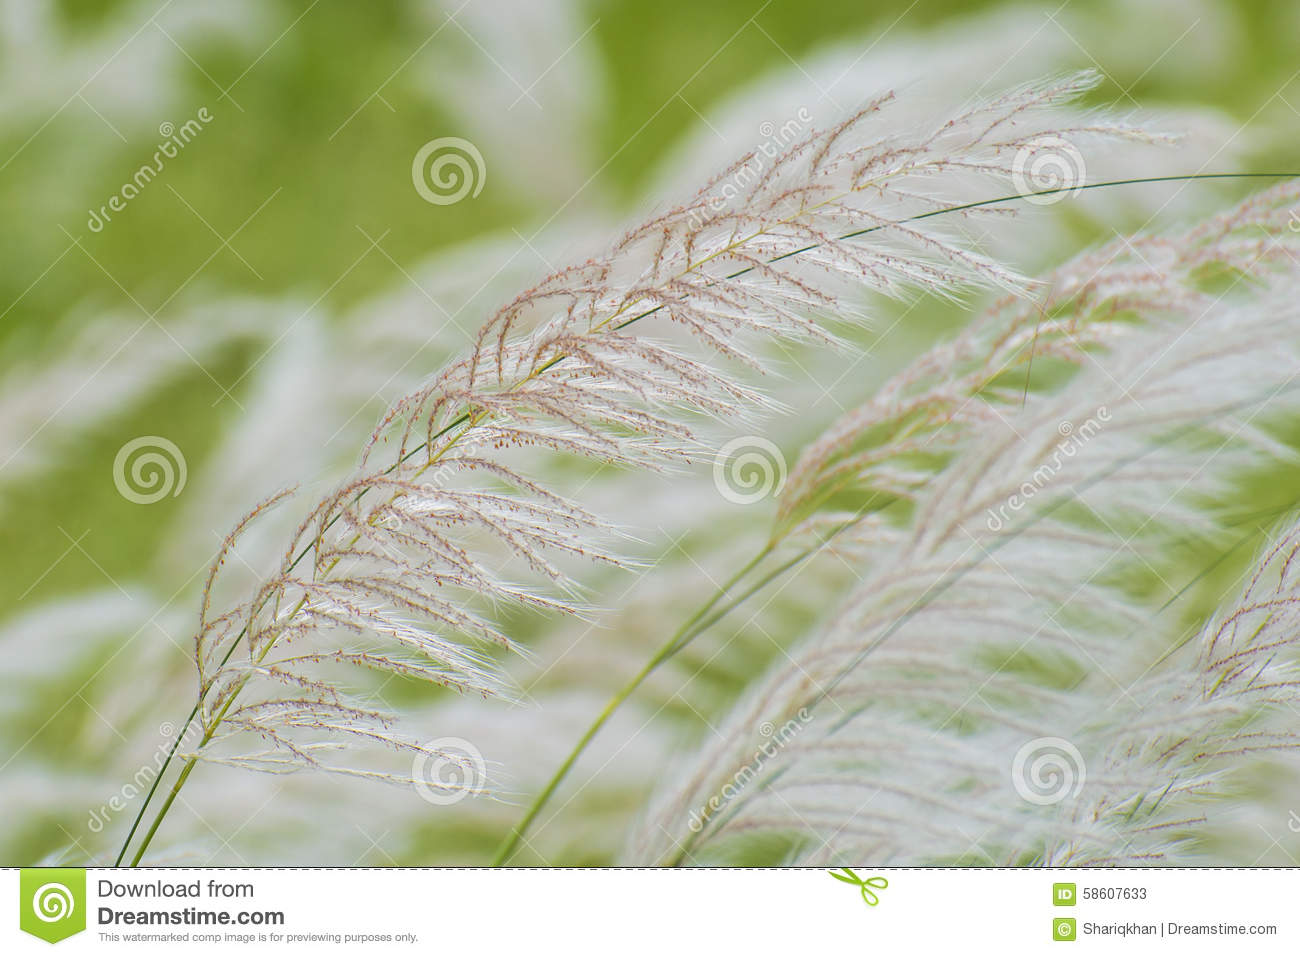 Saccharum Spontaneum Or Kans Grass Stock Photo.